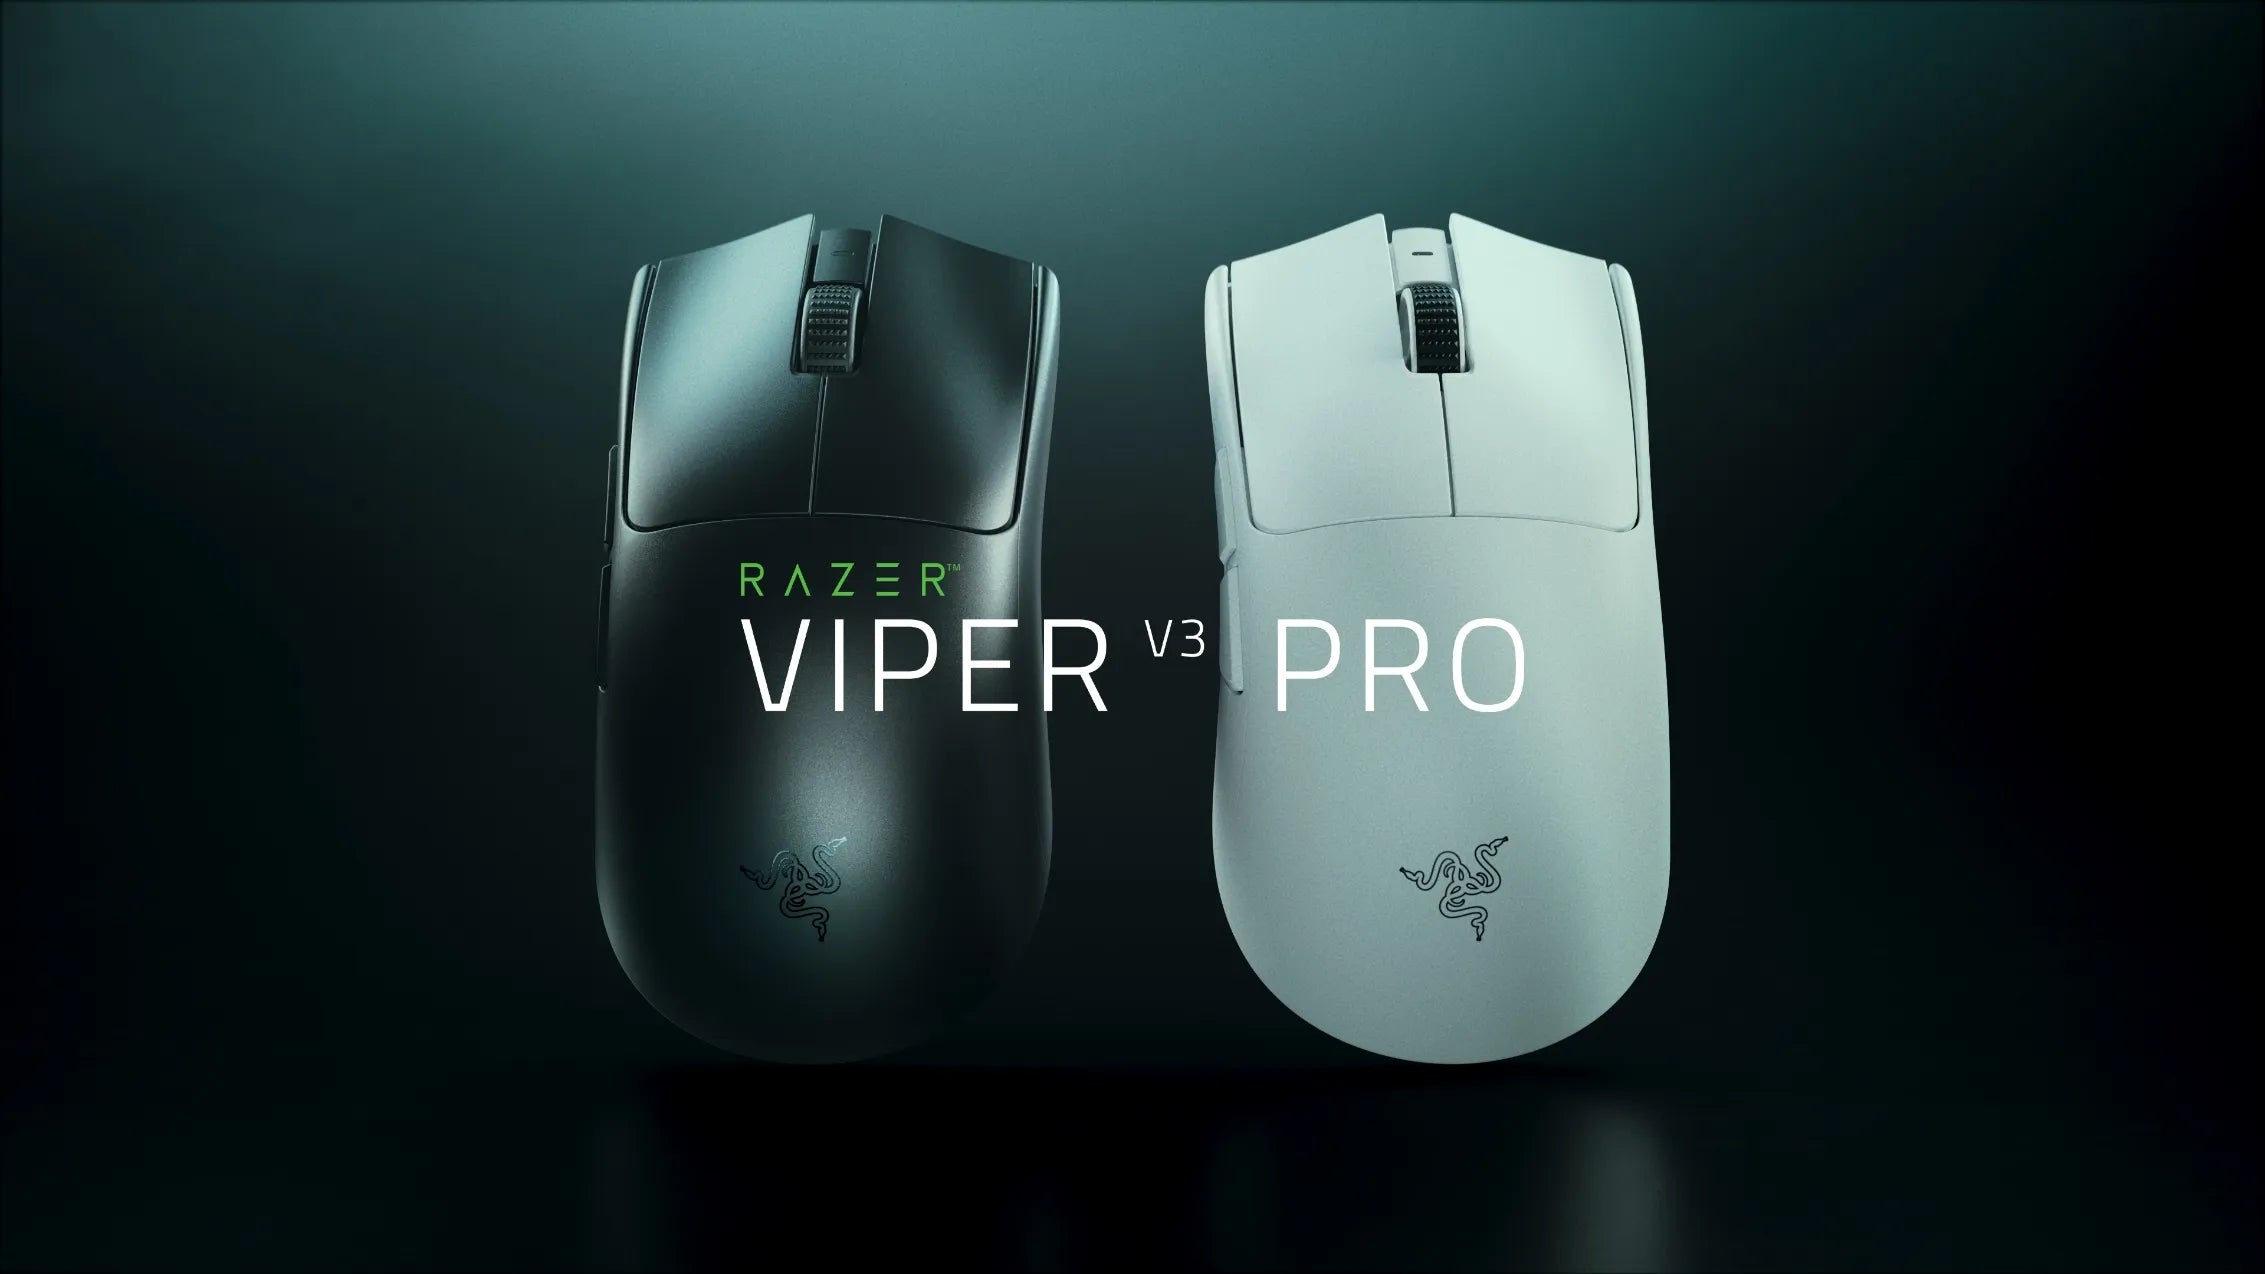 「Razer Viper V3 Pro」徹底レビュー。プロと共に開発された新たな「定番」。